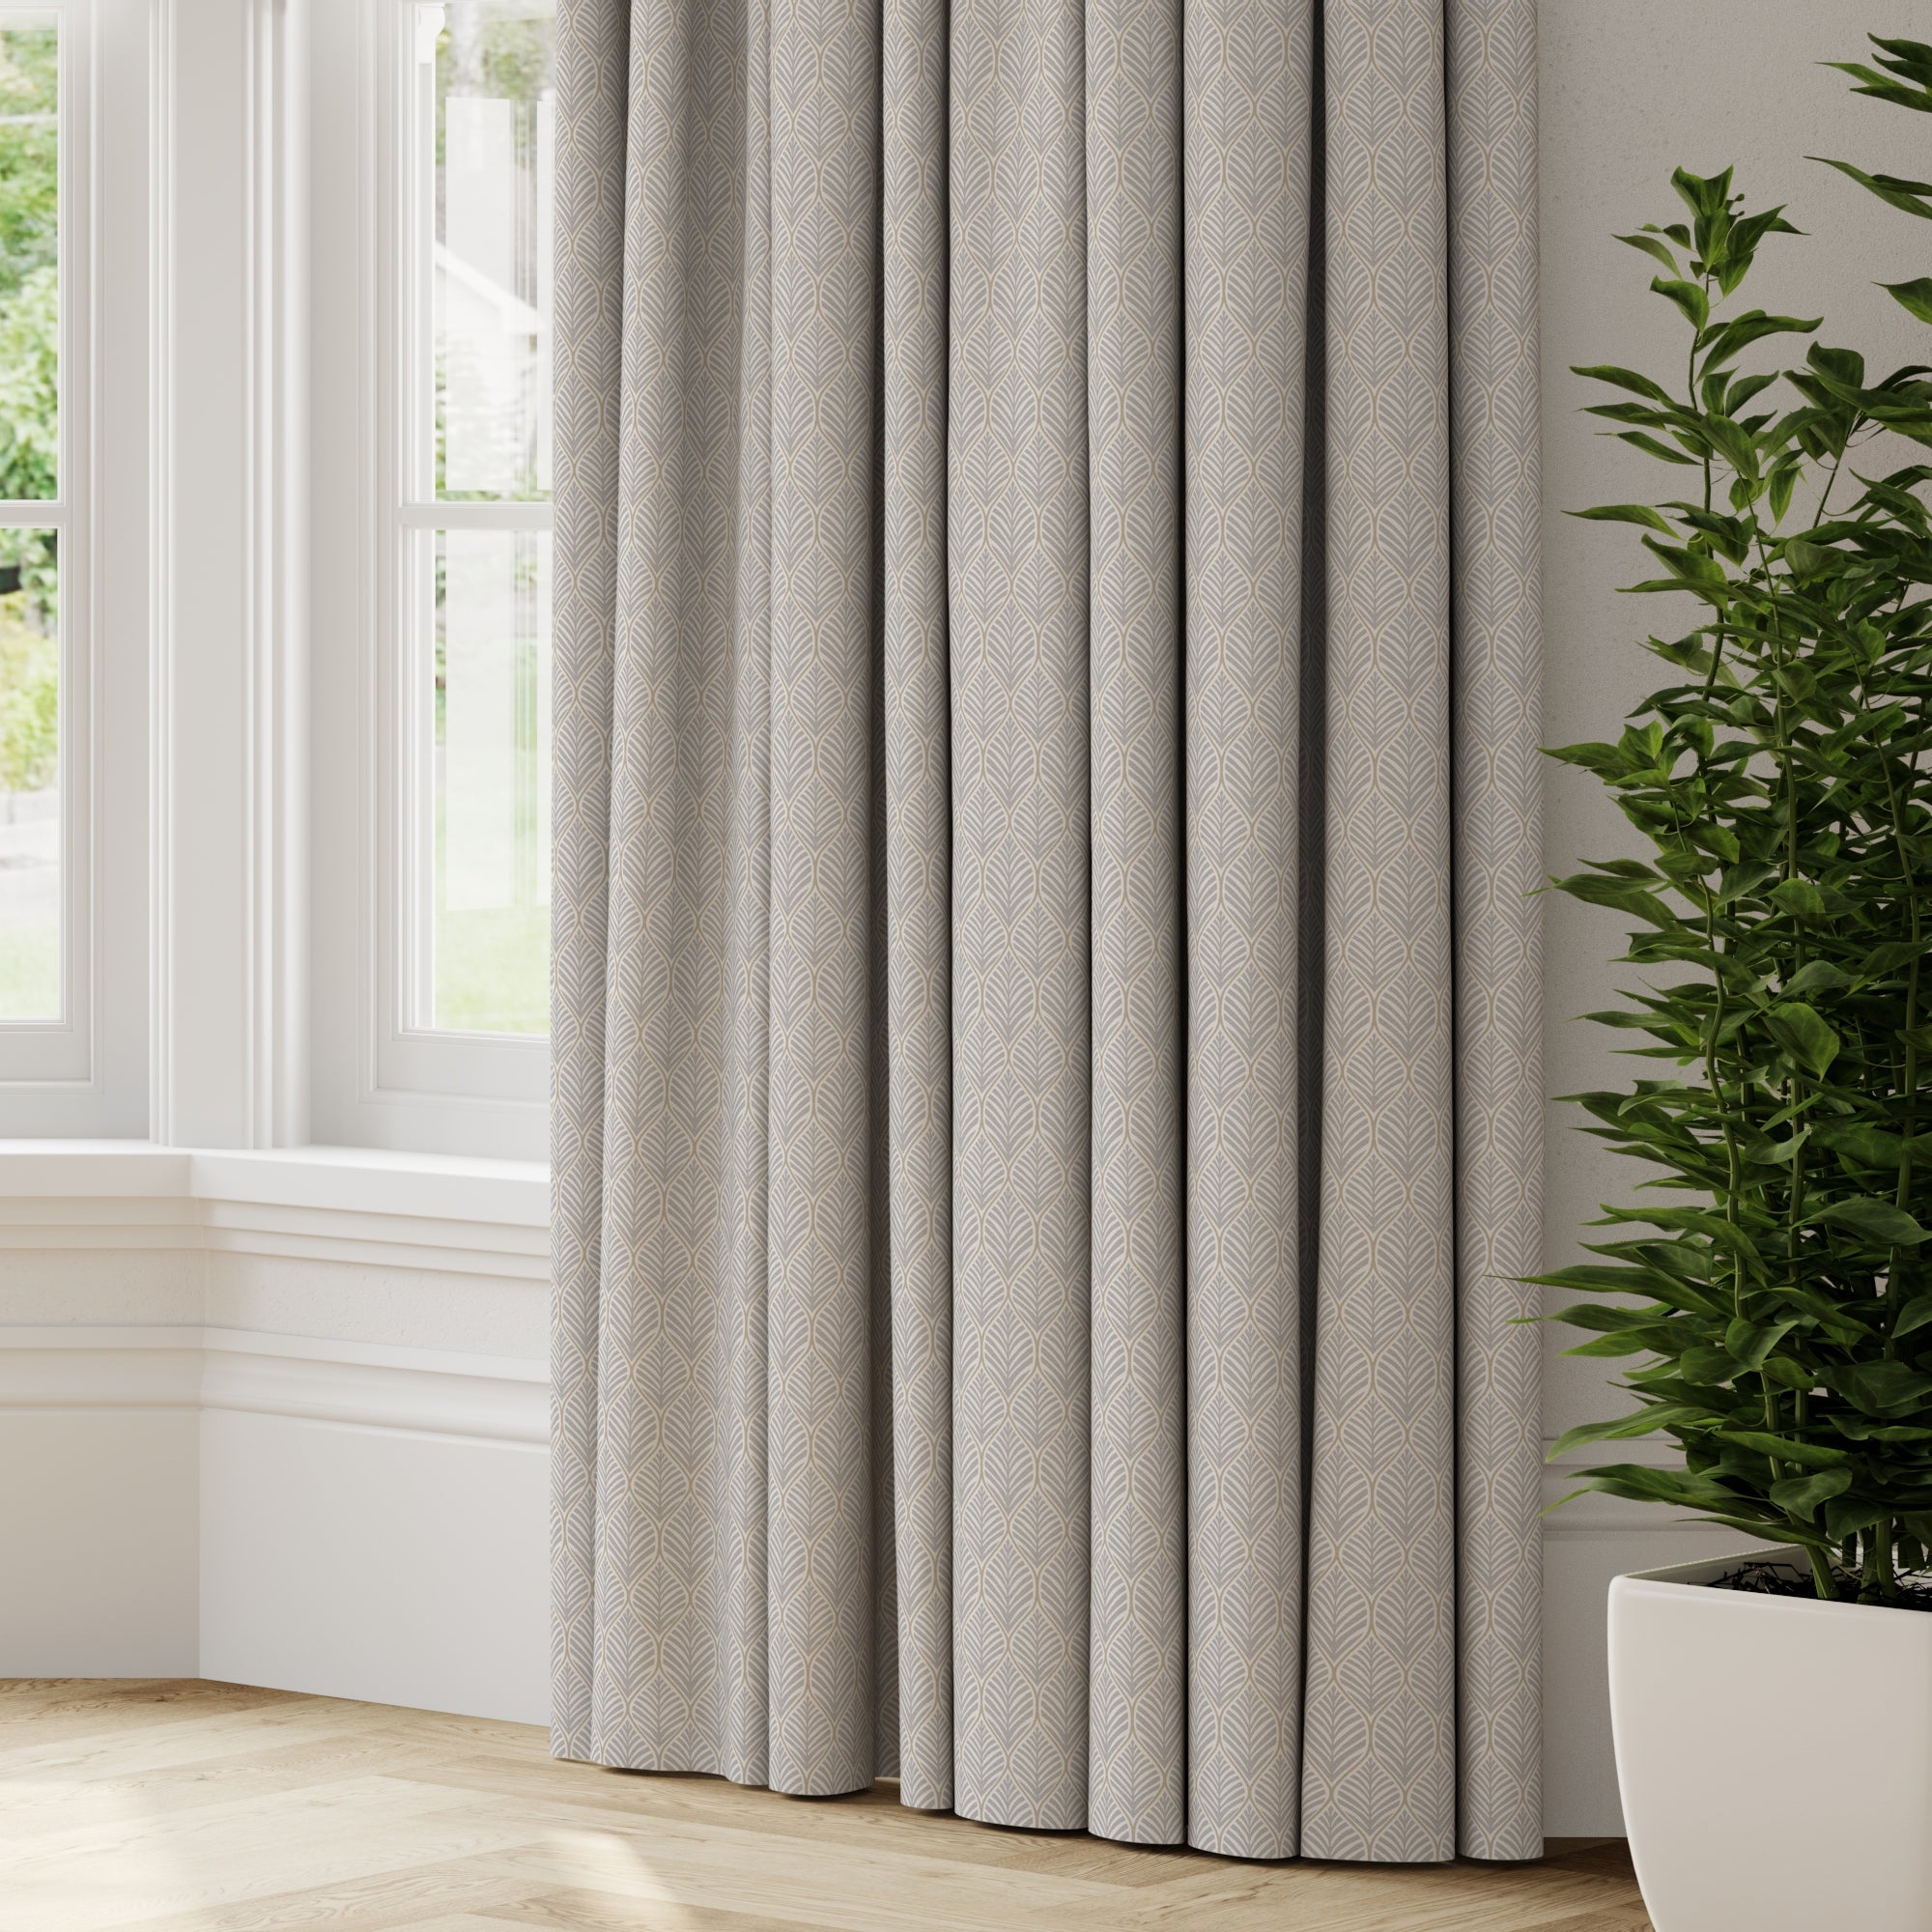 Artel Made to Measure Fire Retardant Curtains grey